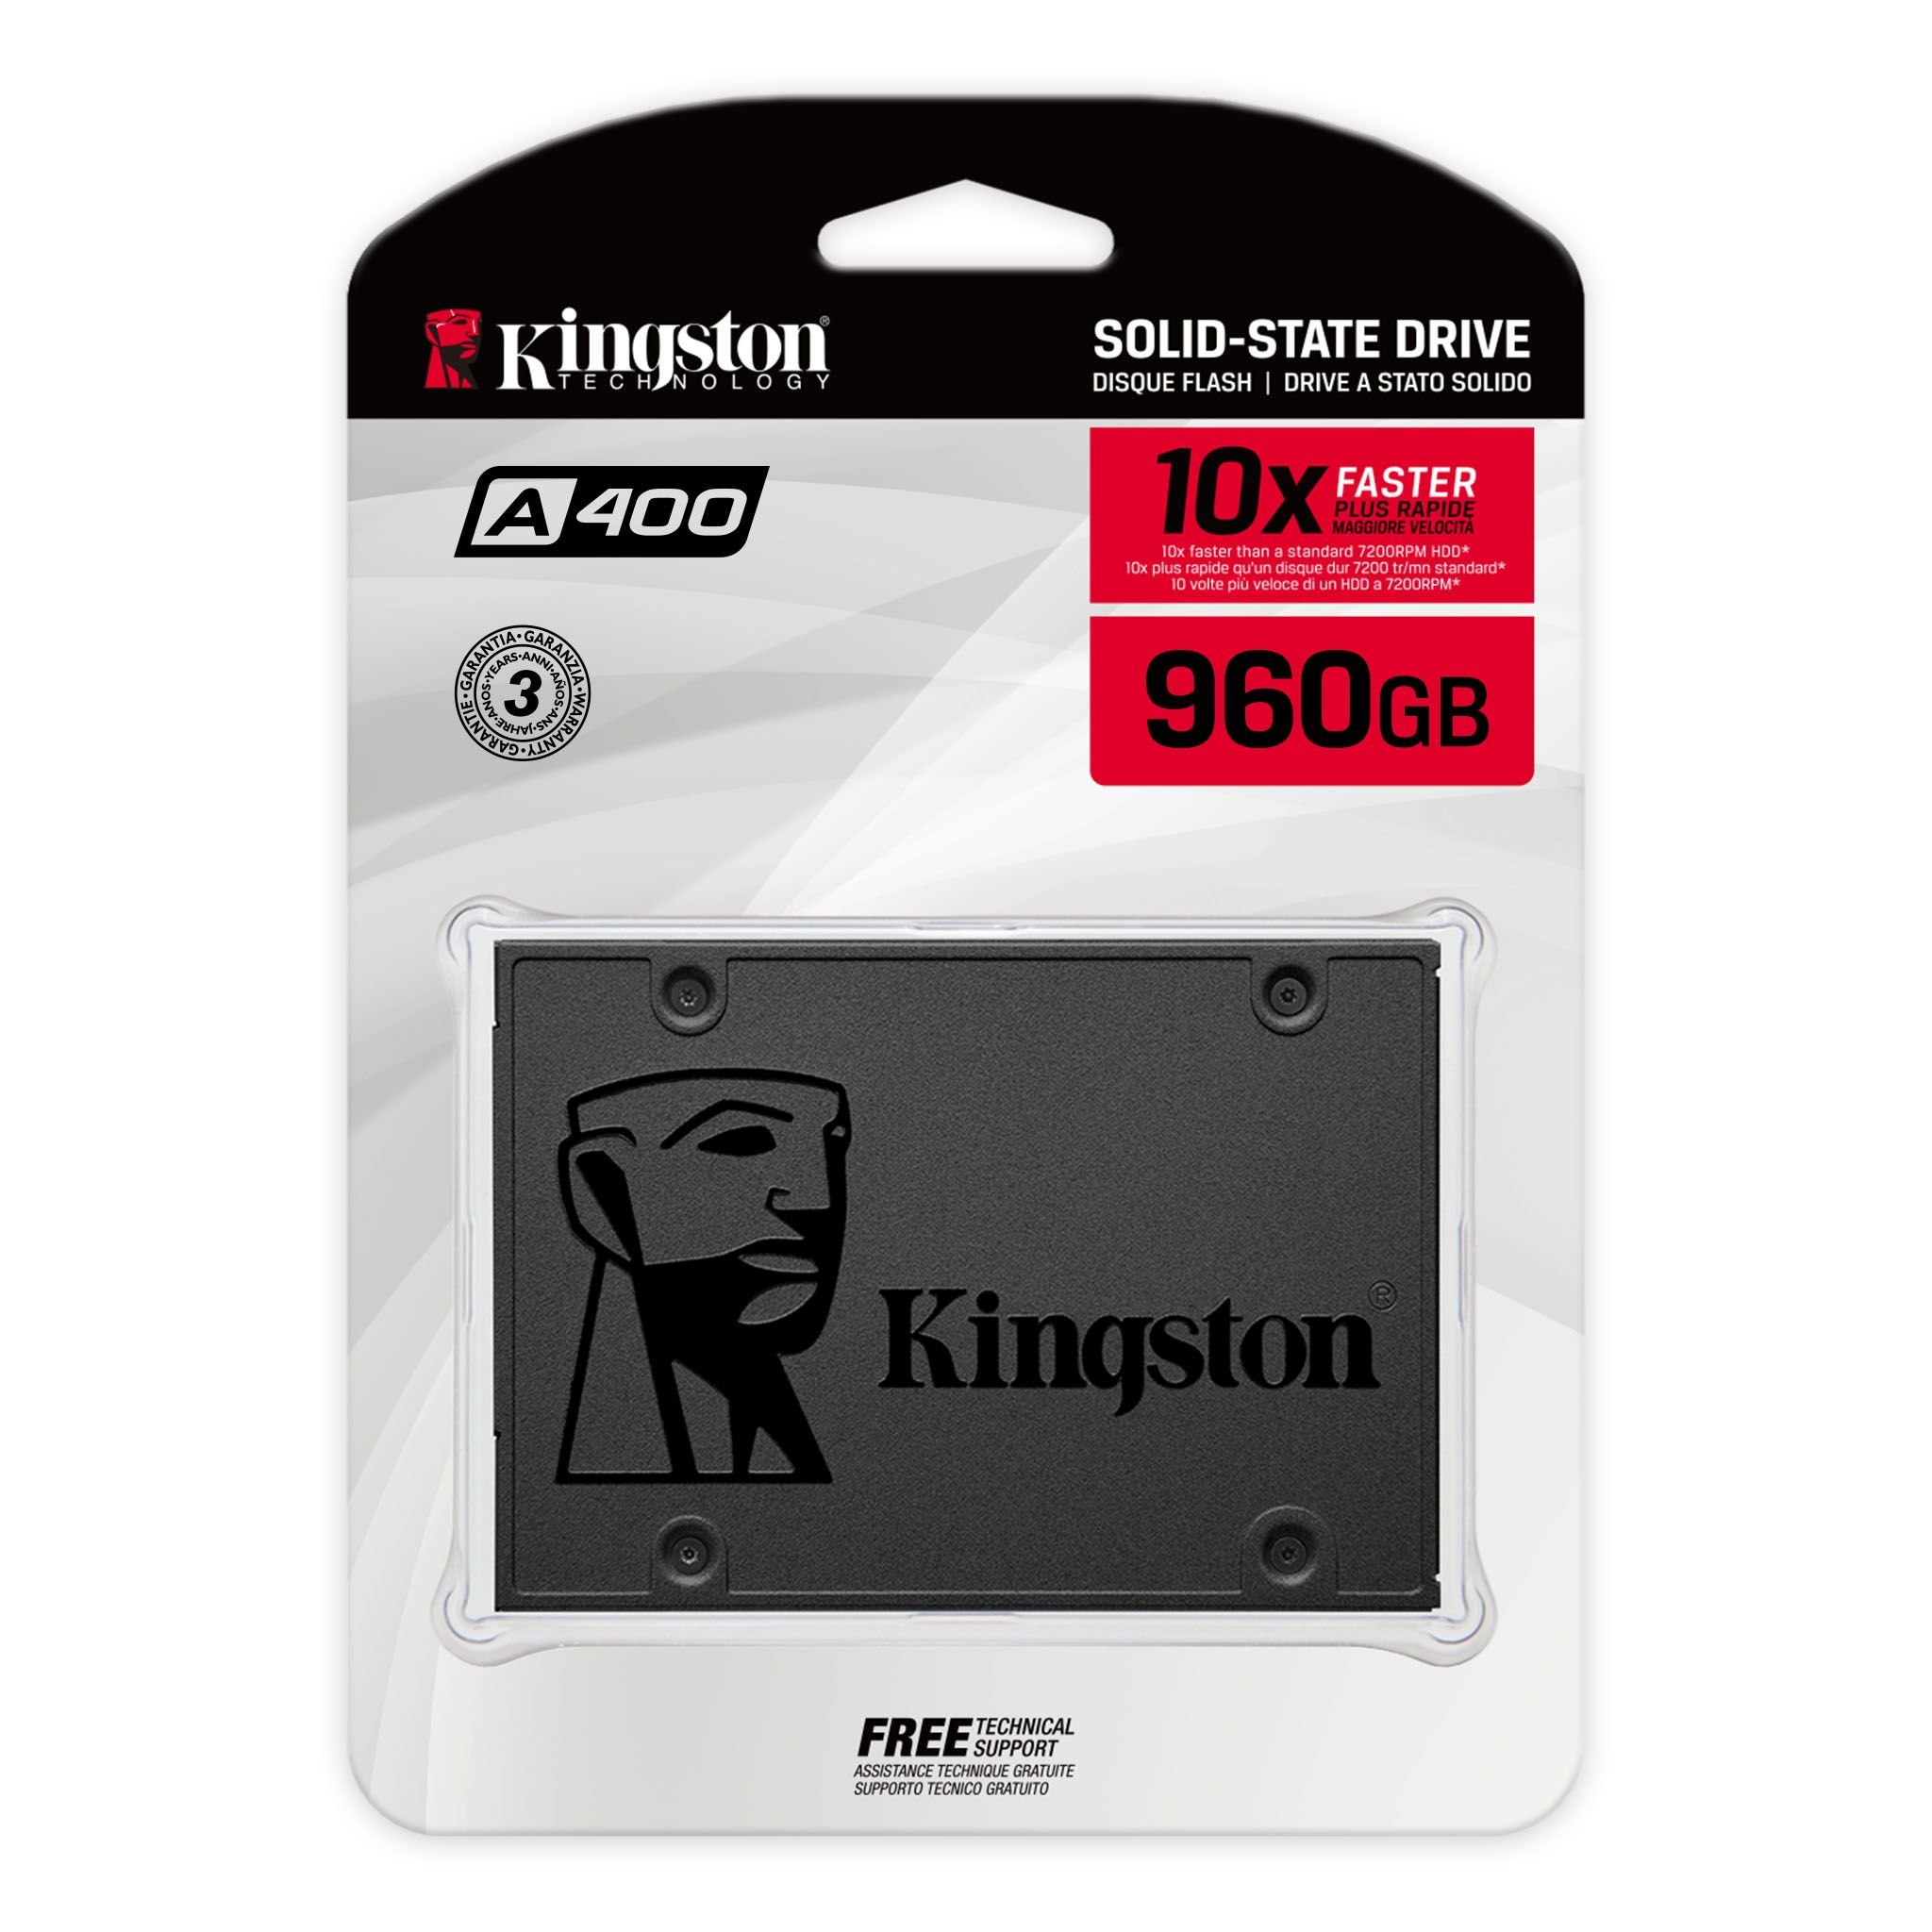 Dysk Kingston SSD A400 SERIES 960GB w opakowaniu